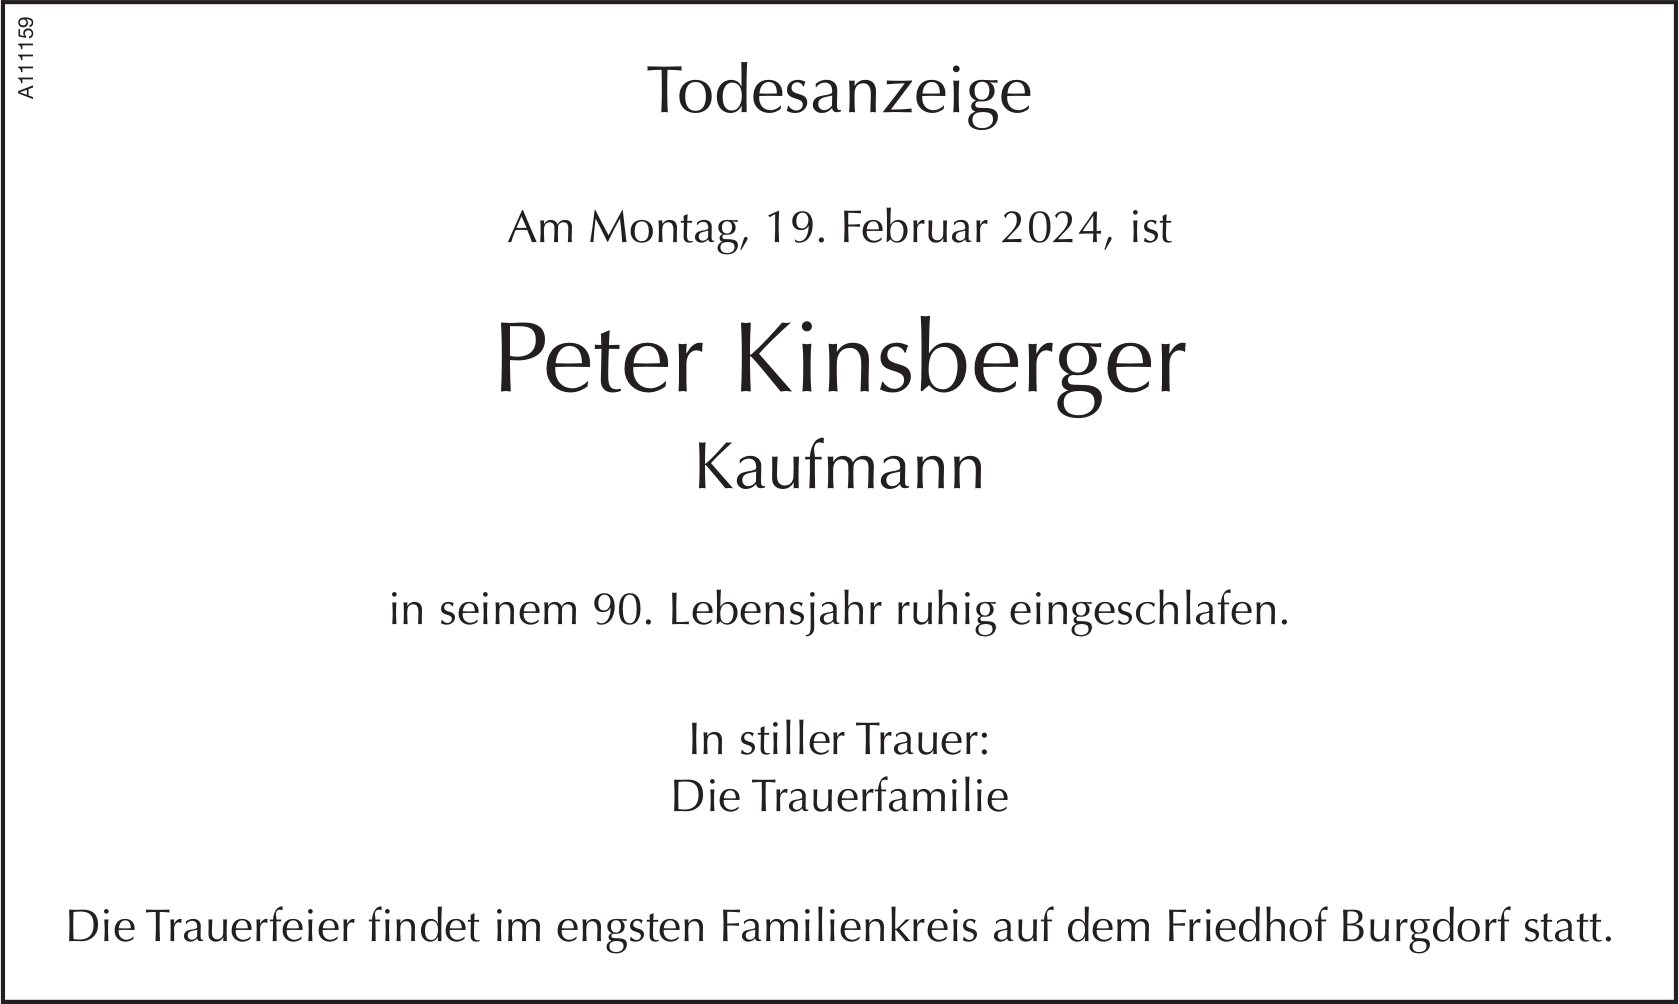 Peter Kinsberger, Februar 2024 / TA